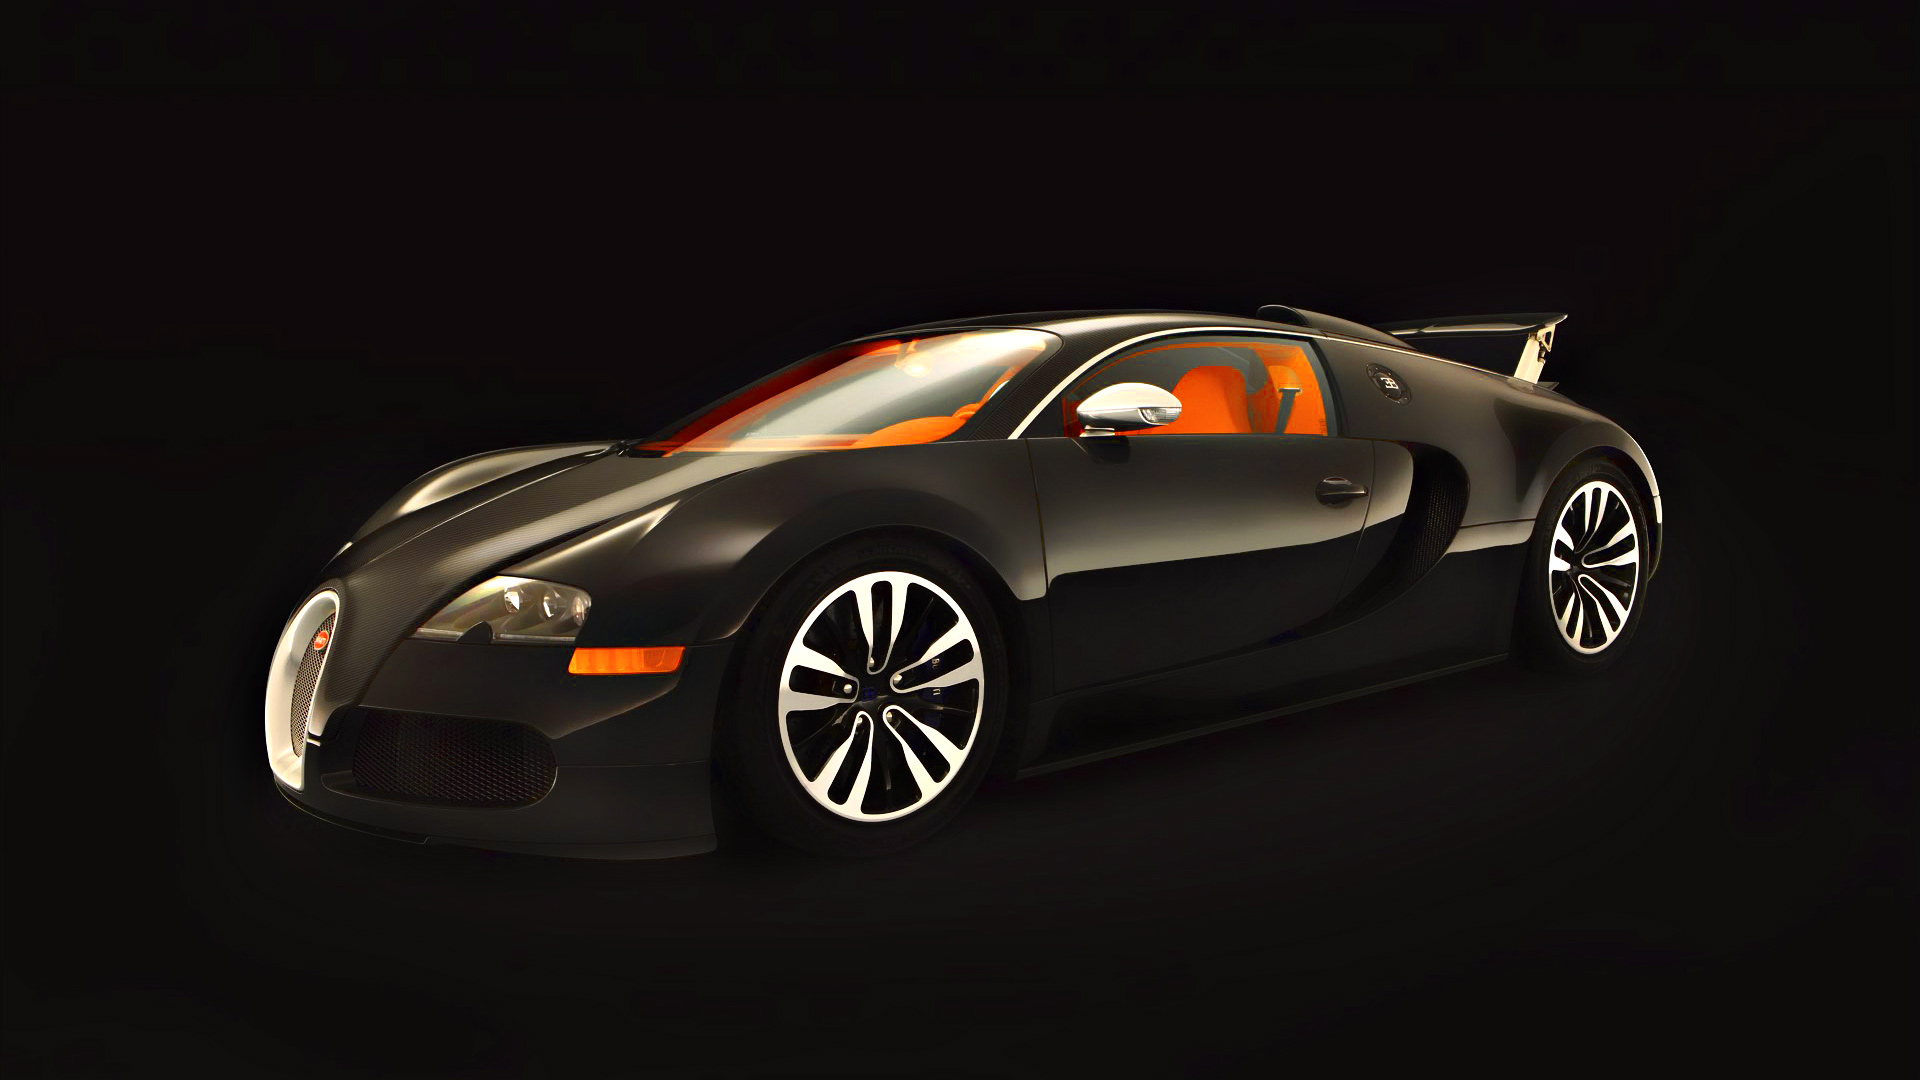 Bugatti Veyron Wallpaper Pictures Image